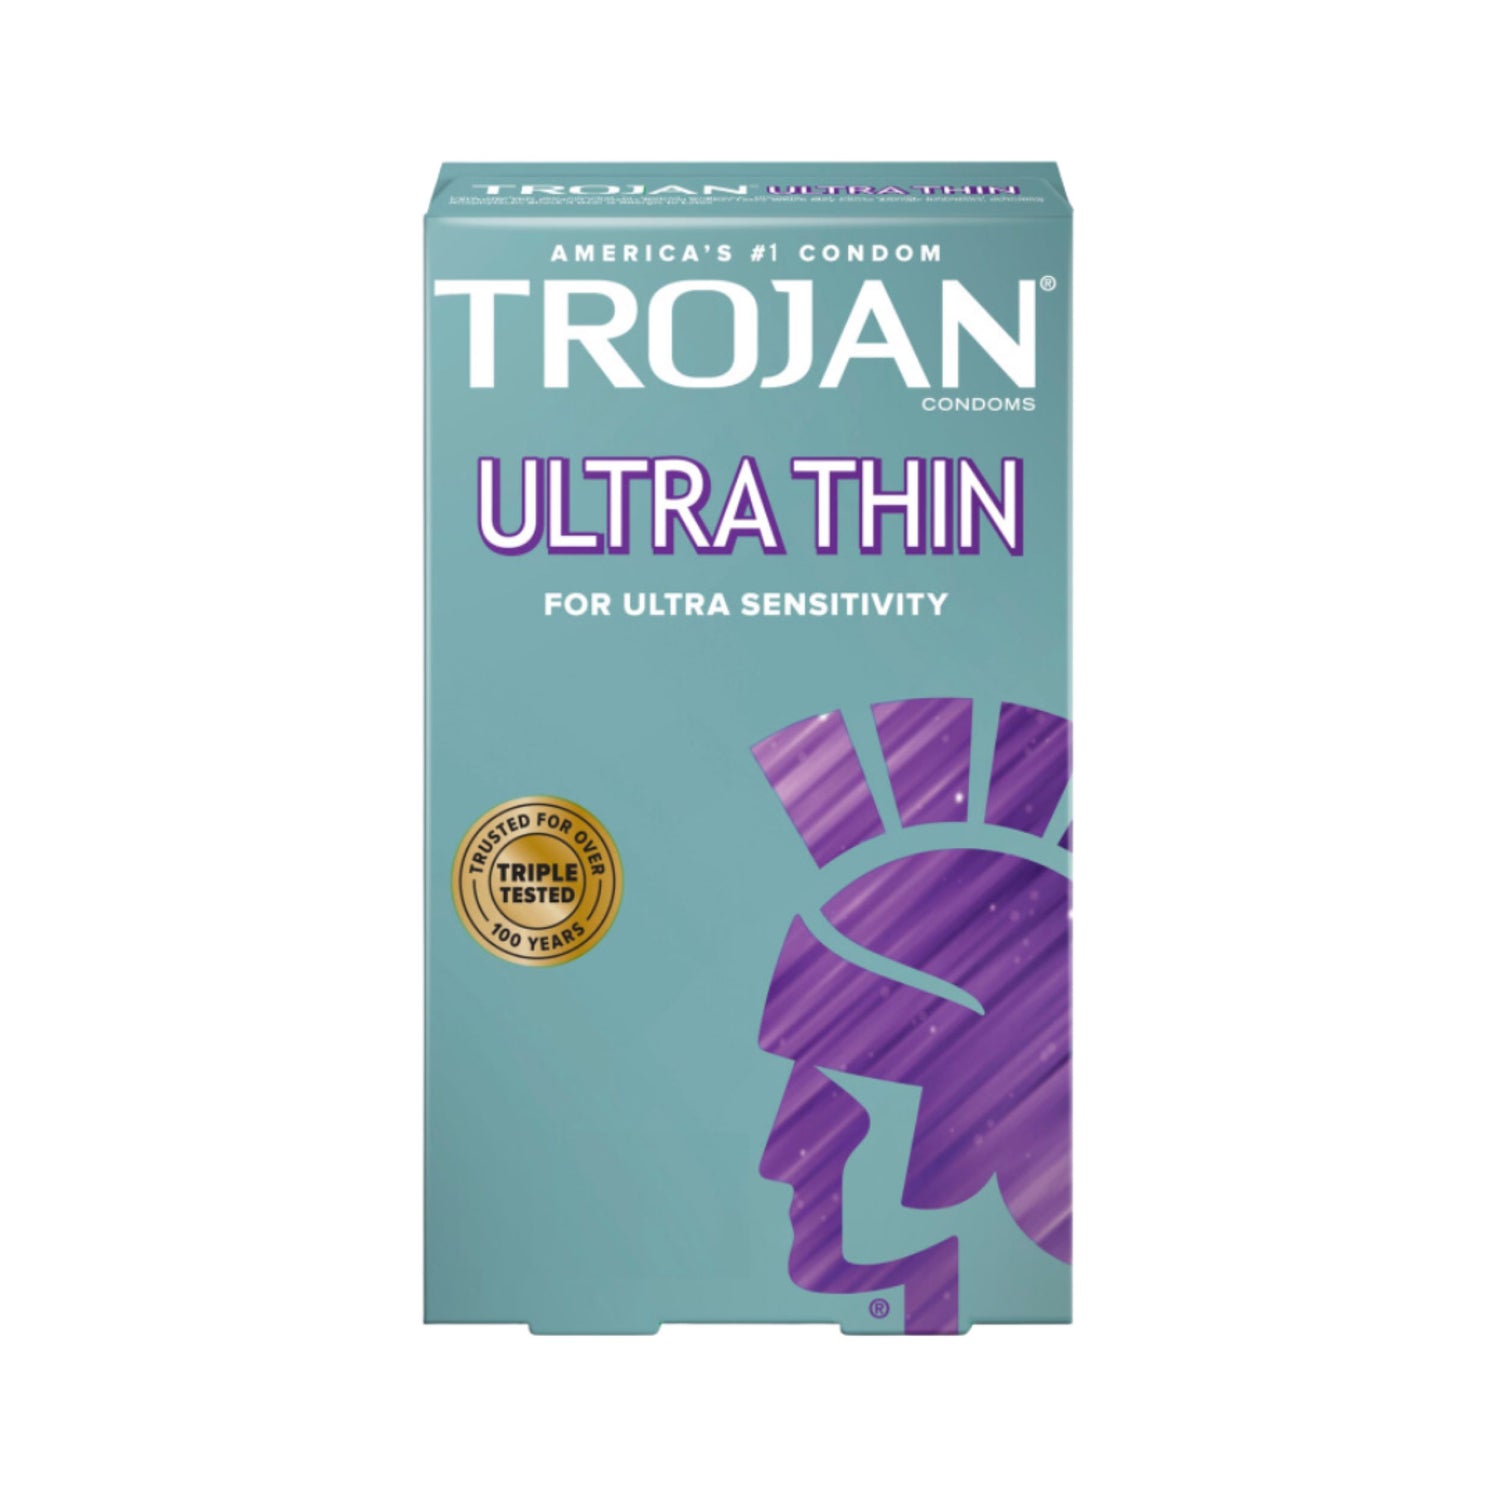 Trojan Ultra Thin Condoms 12 Pack